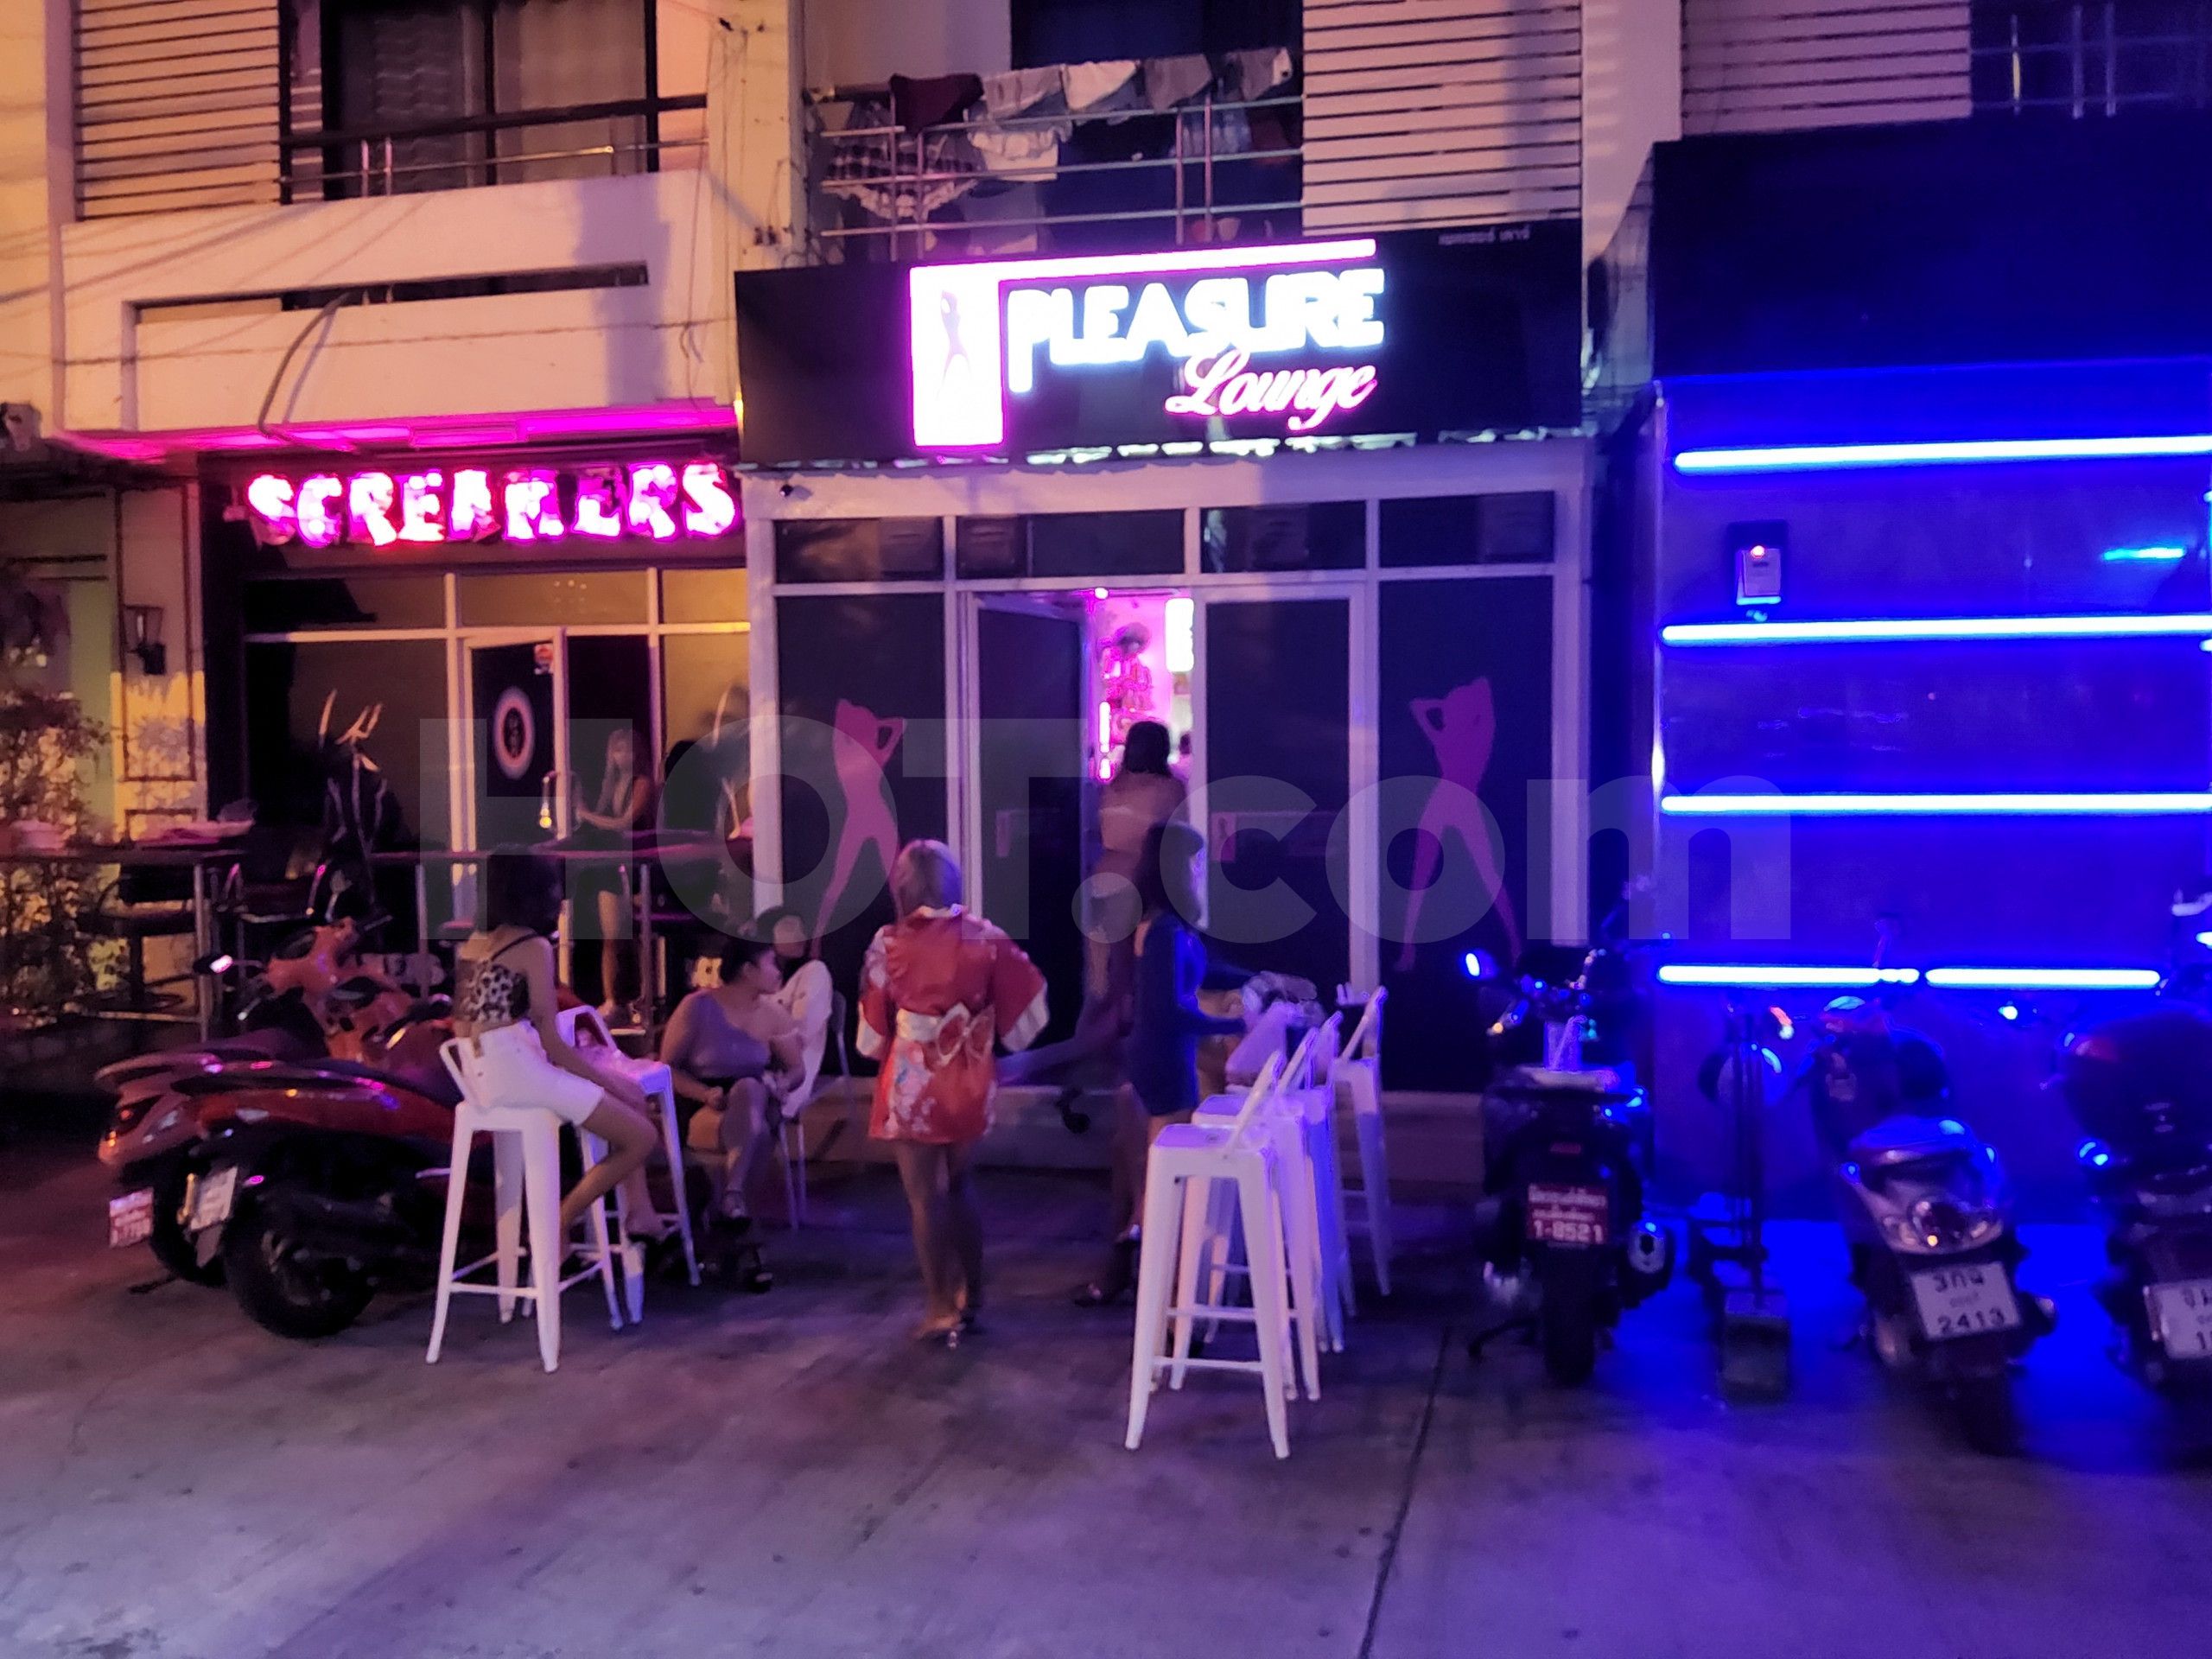 Ban Phatthaya Tai, Thailand Pleasure Lounge